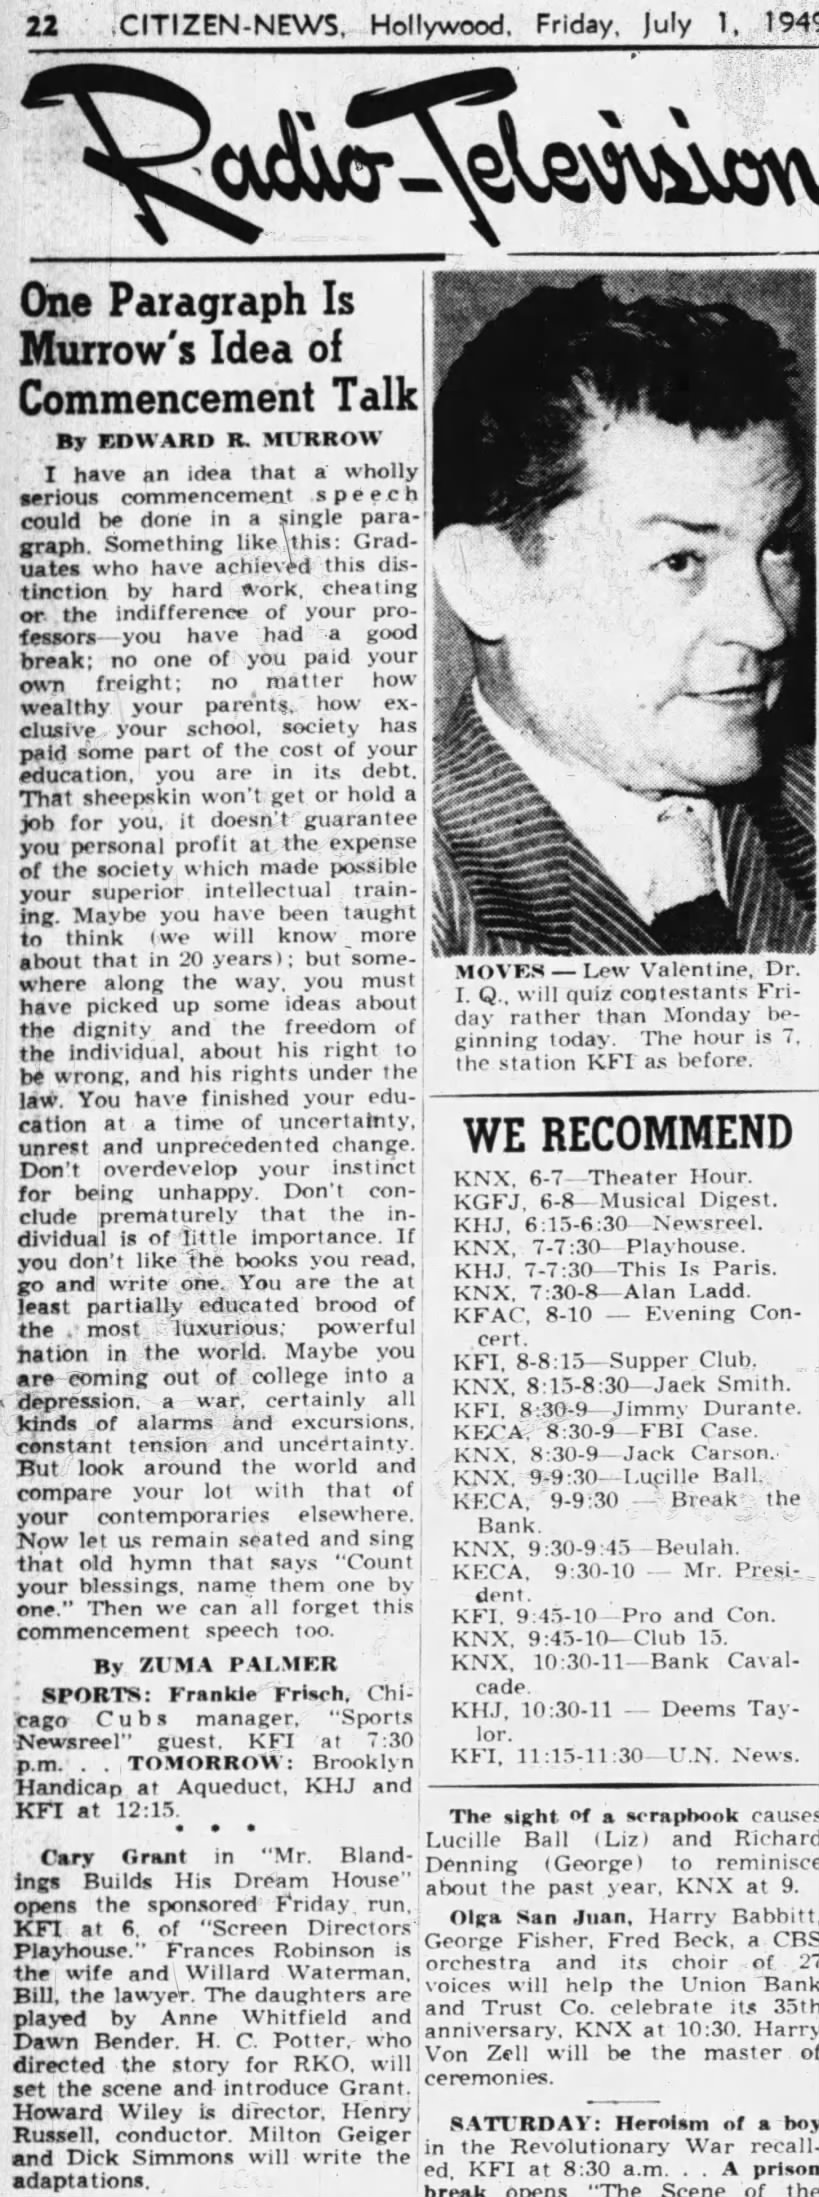 Mr. Blandings, Screen Director's Playhouse
01 Jul 1949,